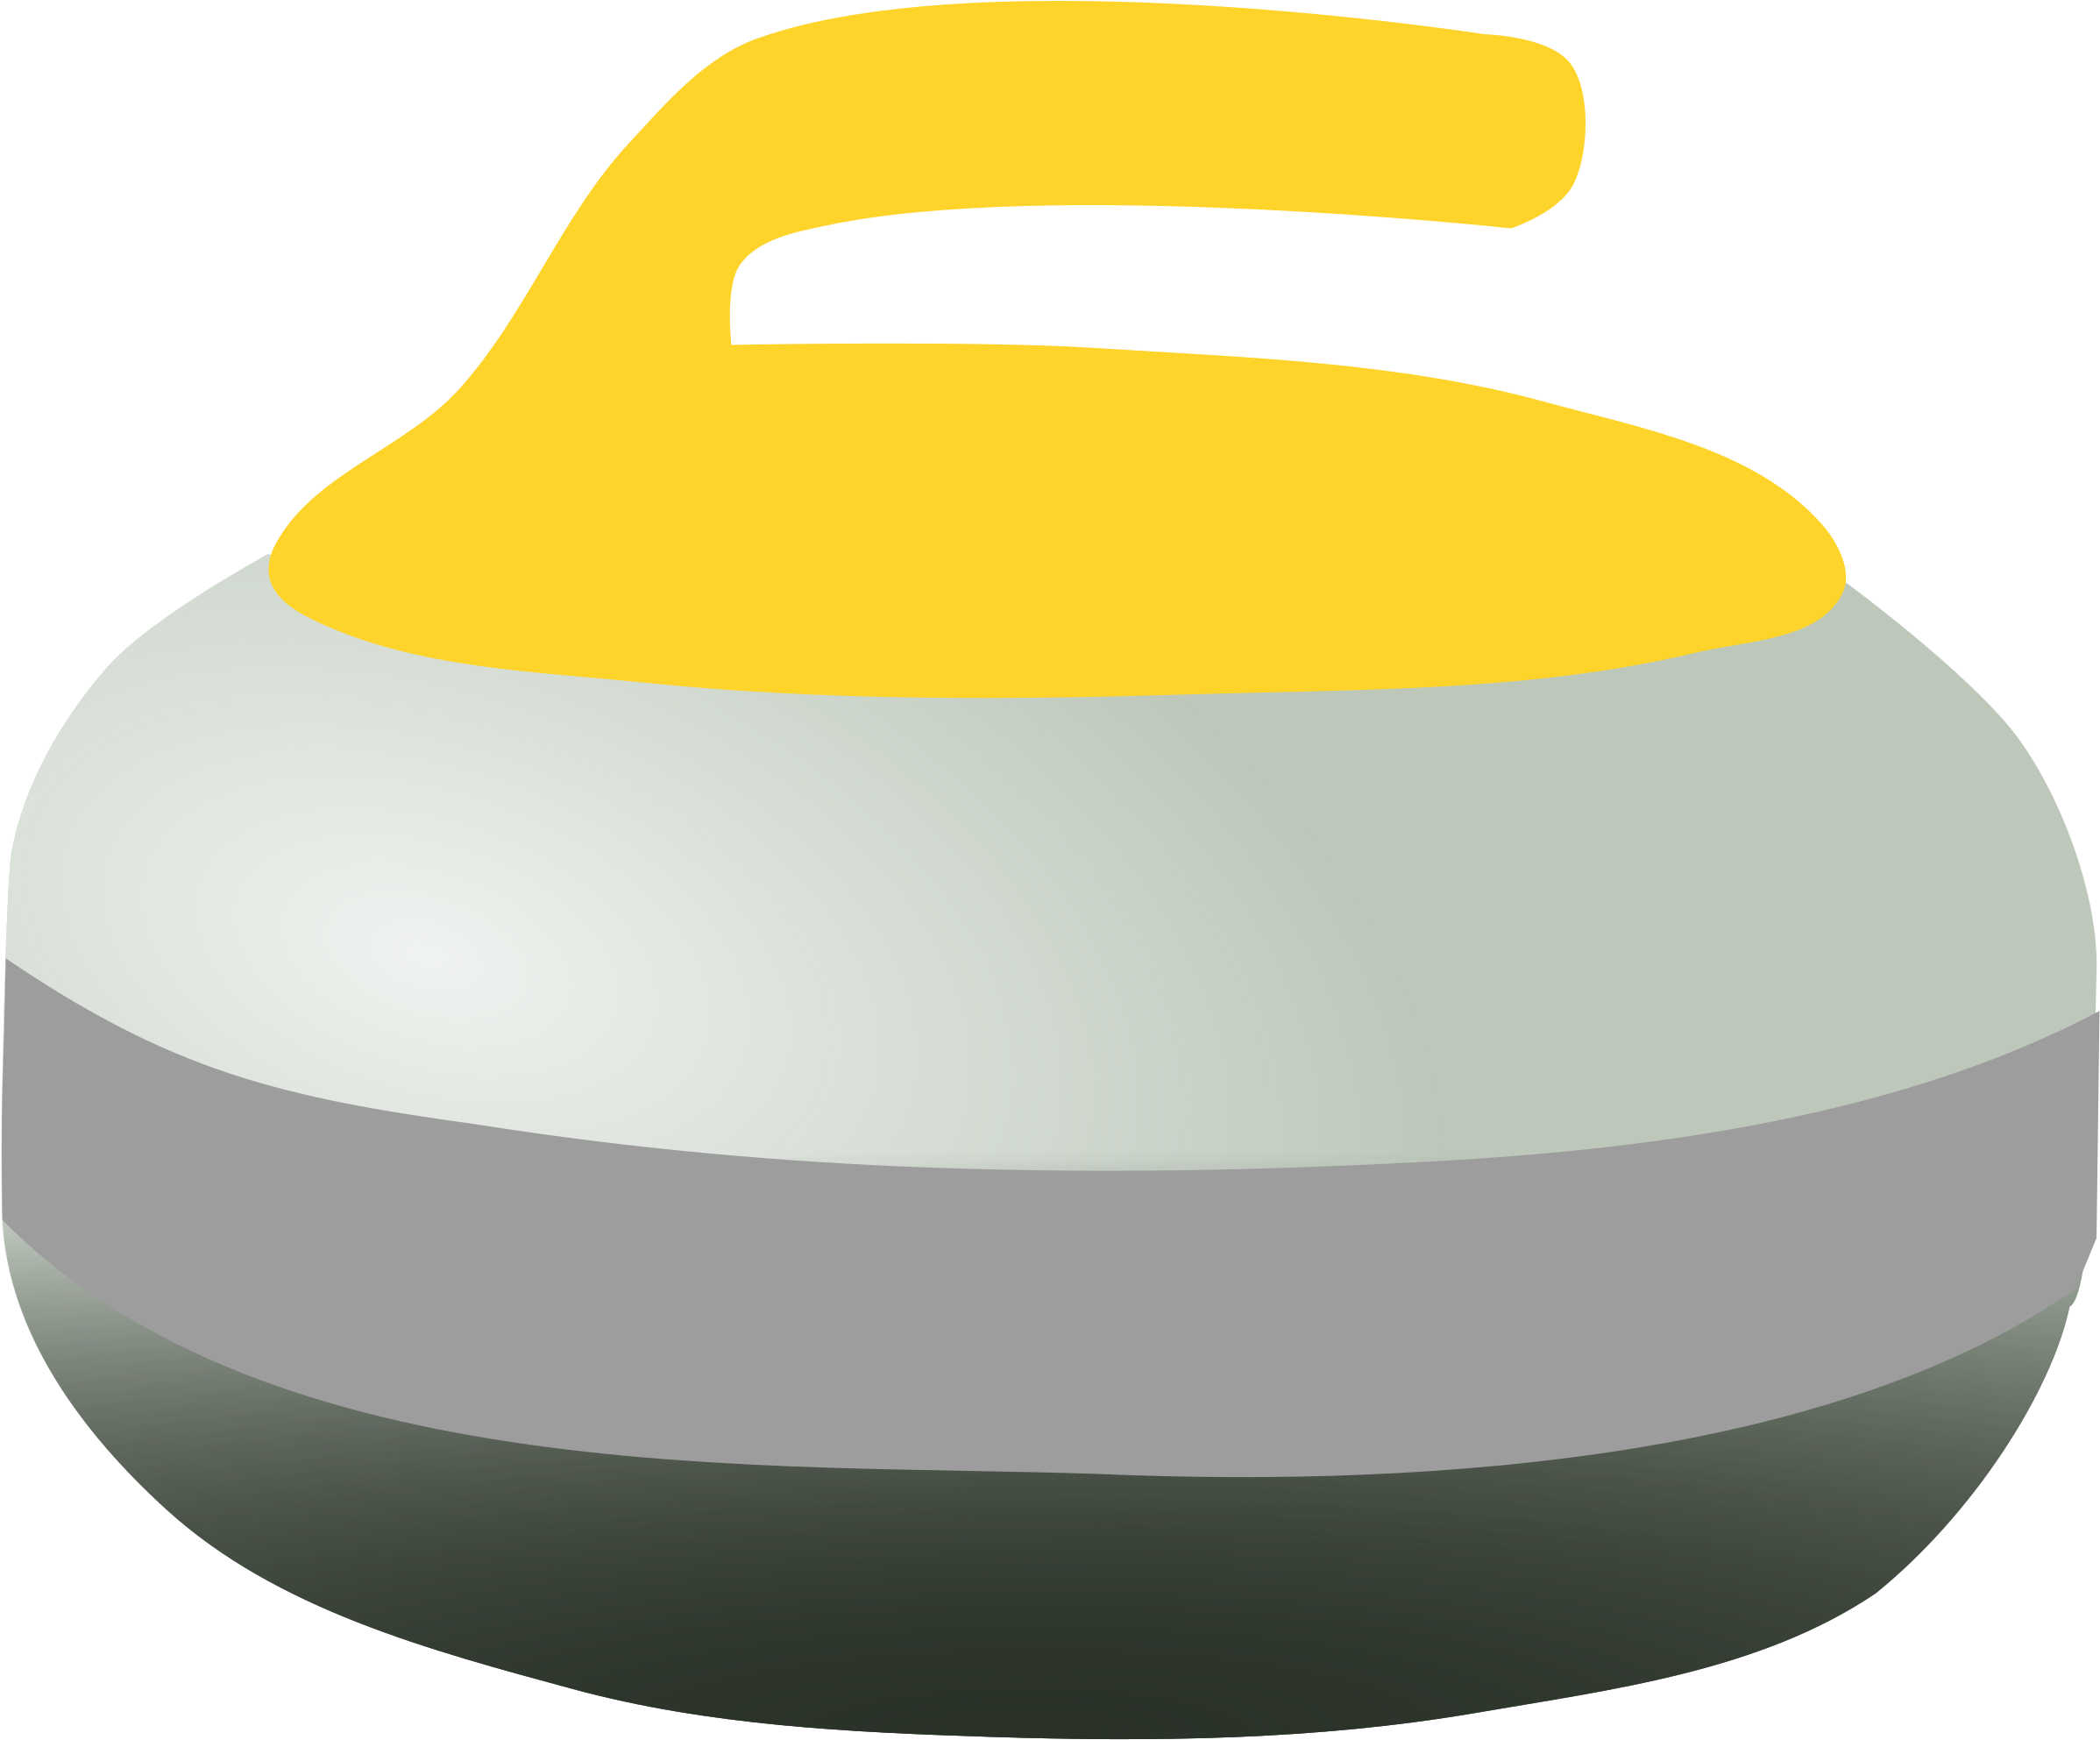 Curling Rock - Yellow Curling Rock Clipart (2400x1993)